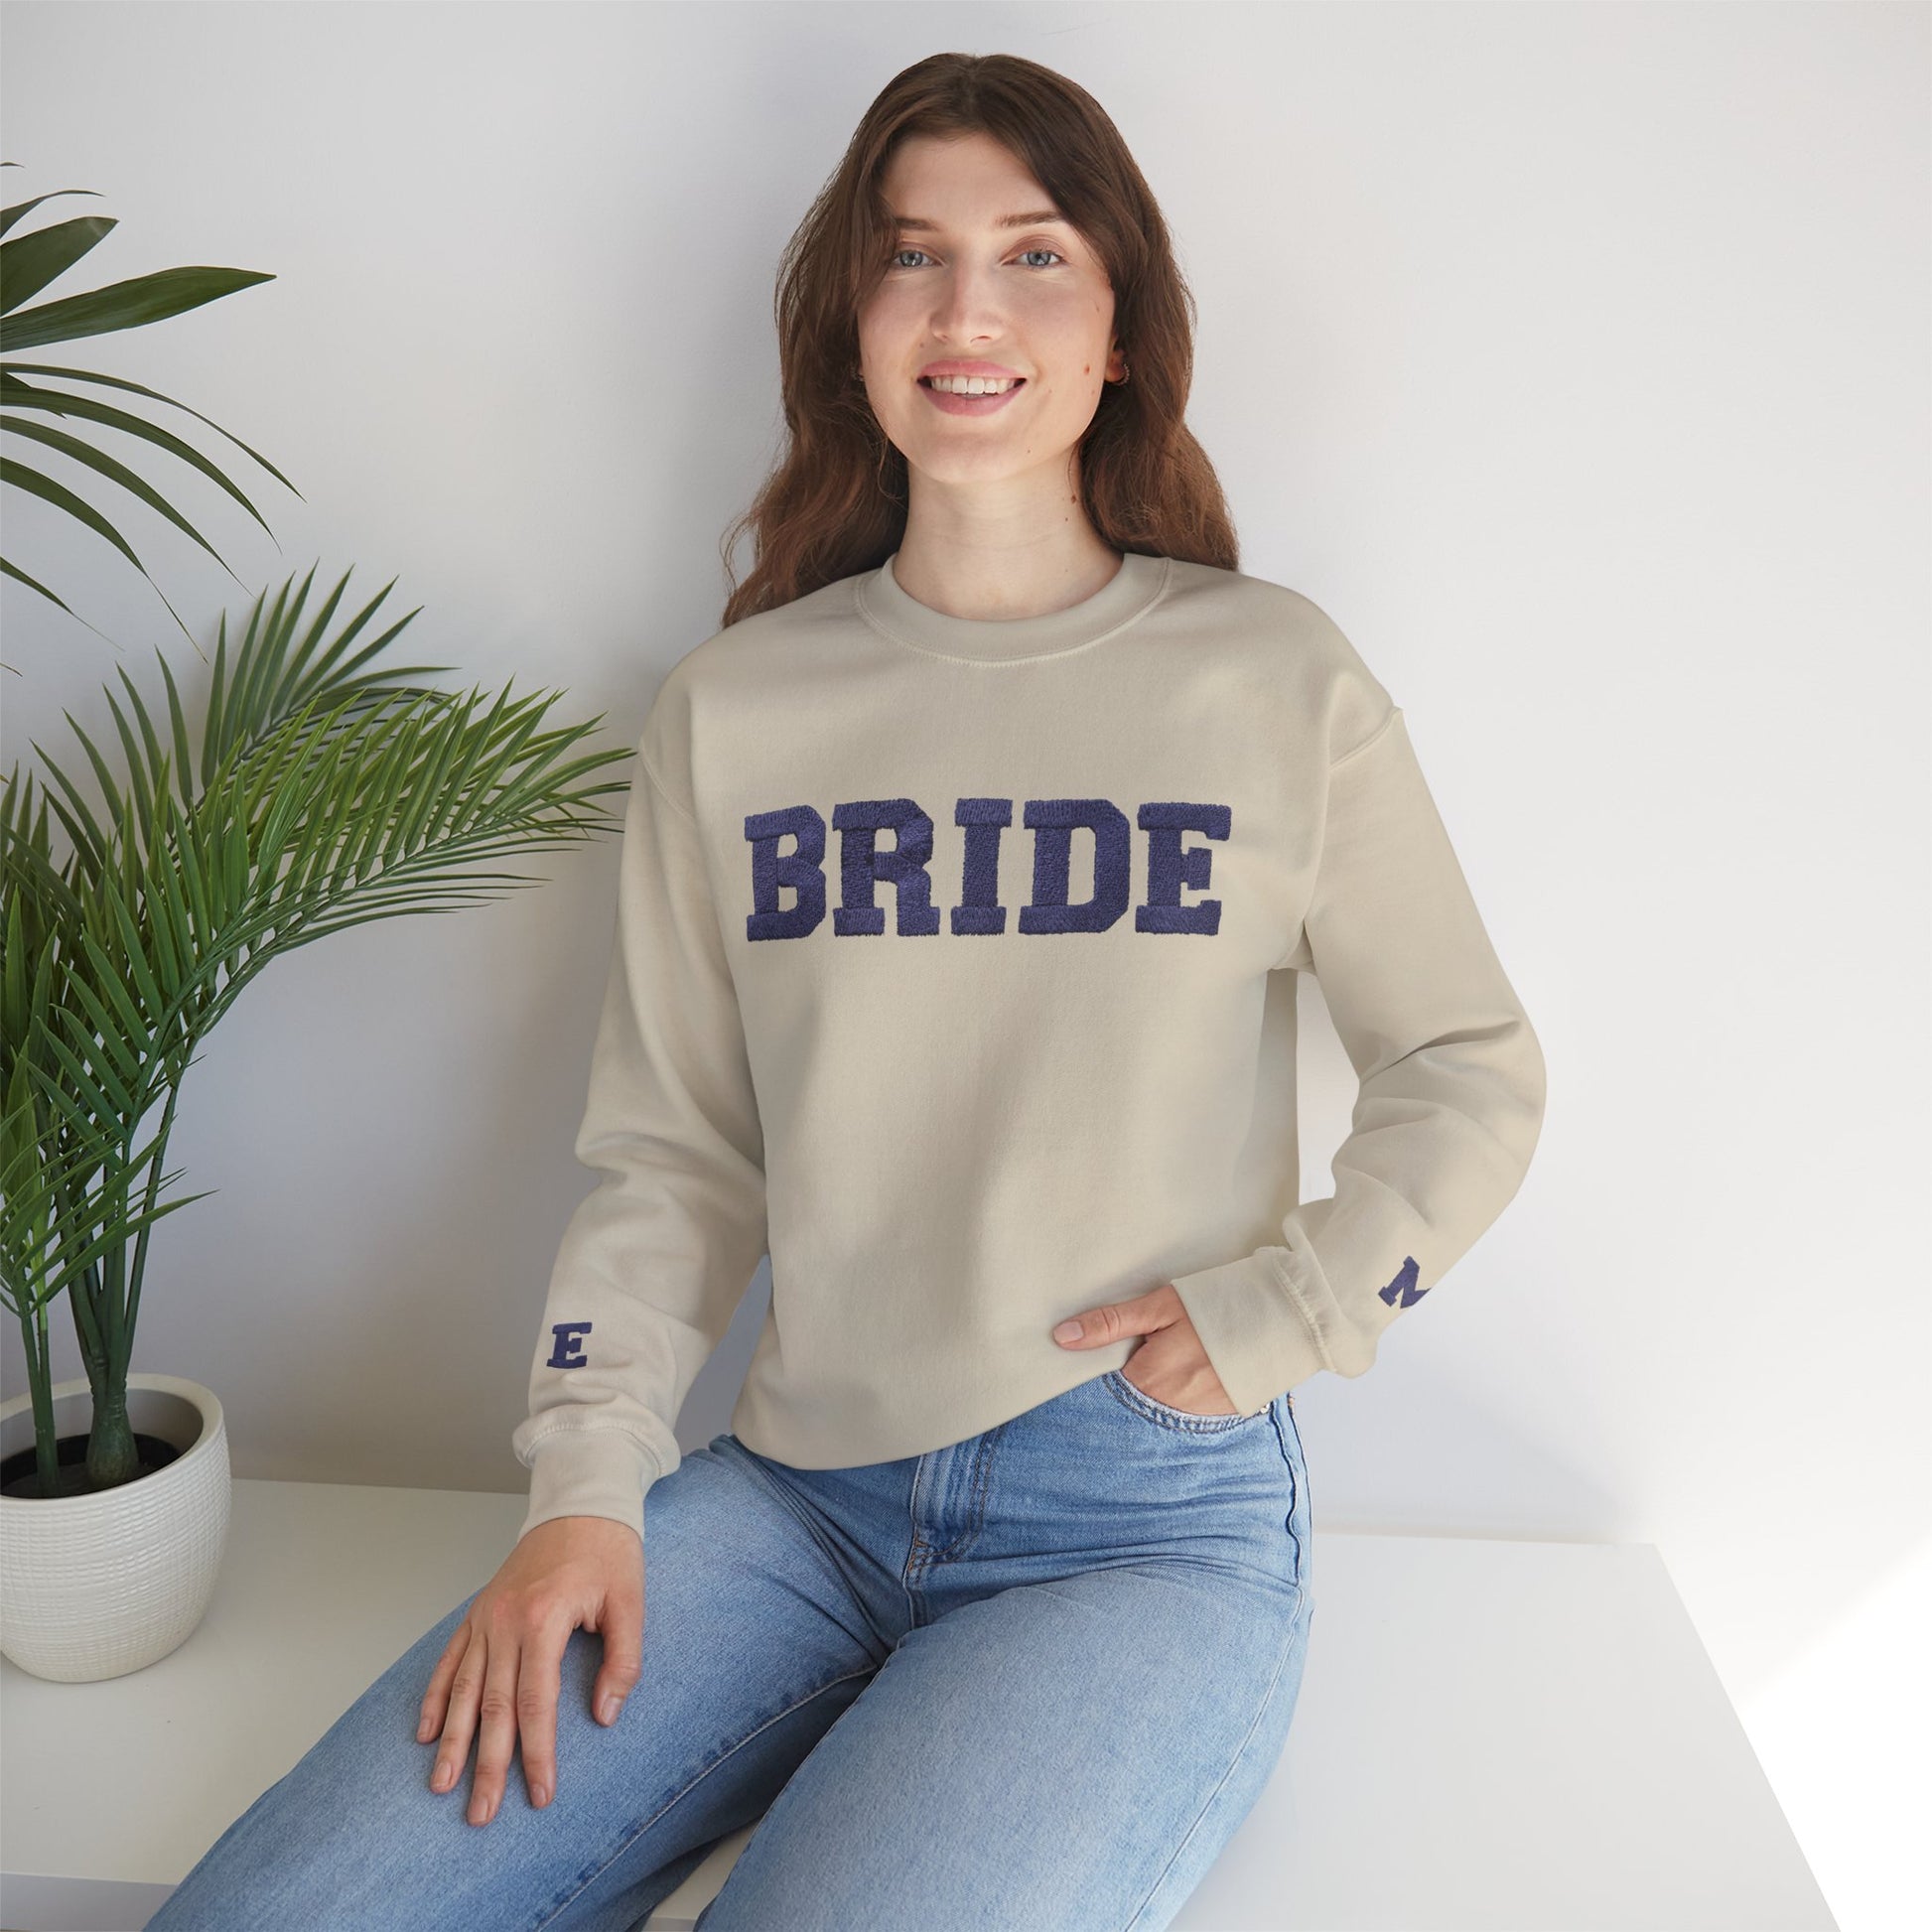 Bride Sweatshirt With Personalized Initials On Sleeves Sweatshirt Brides by Emilia Milan 